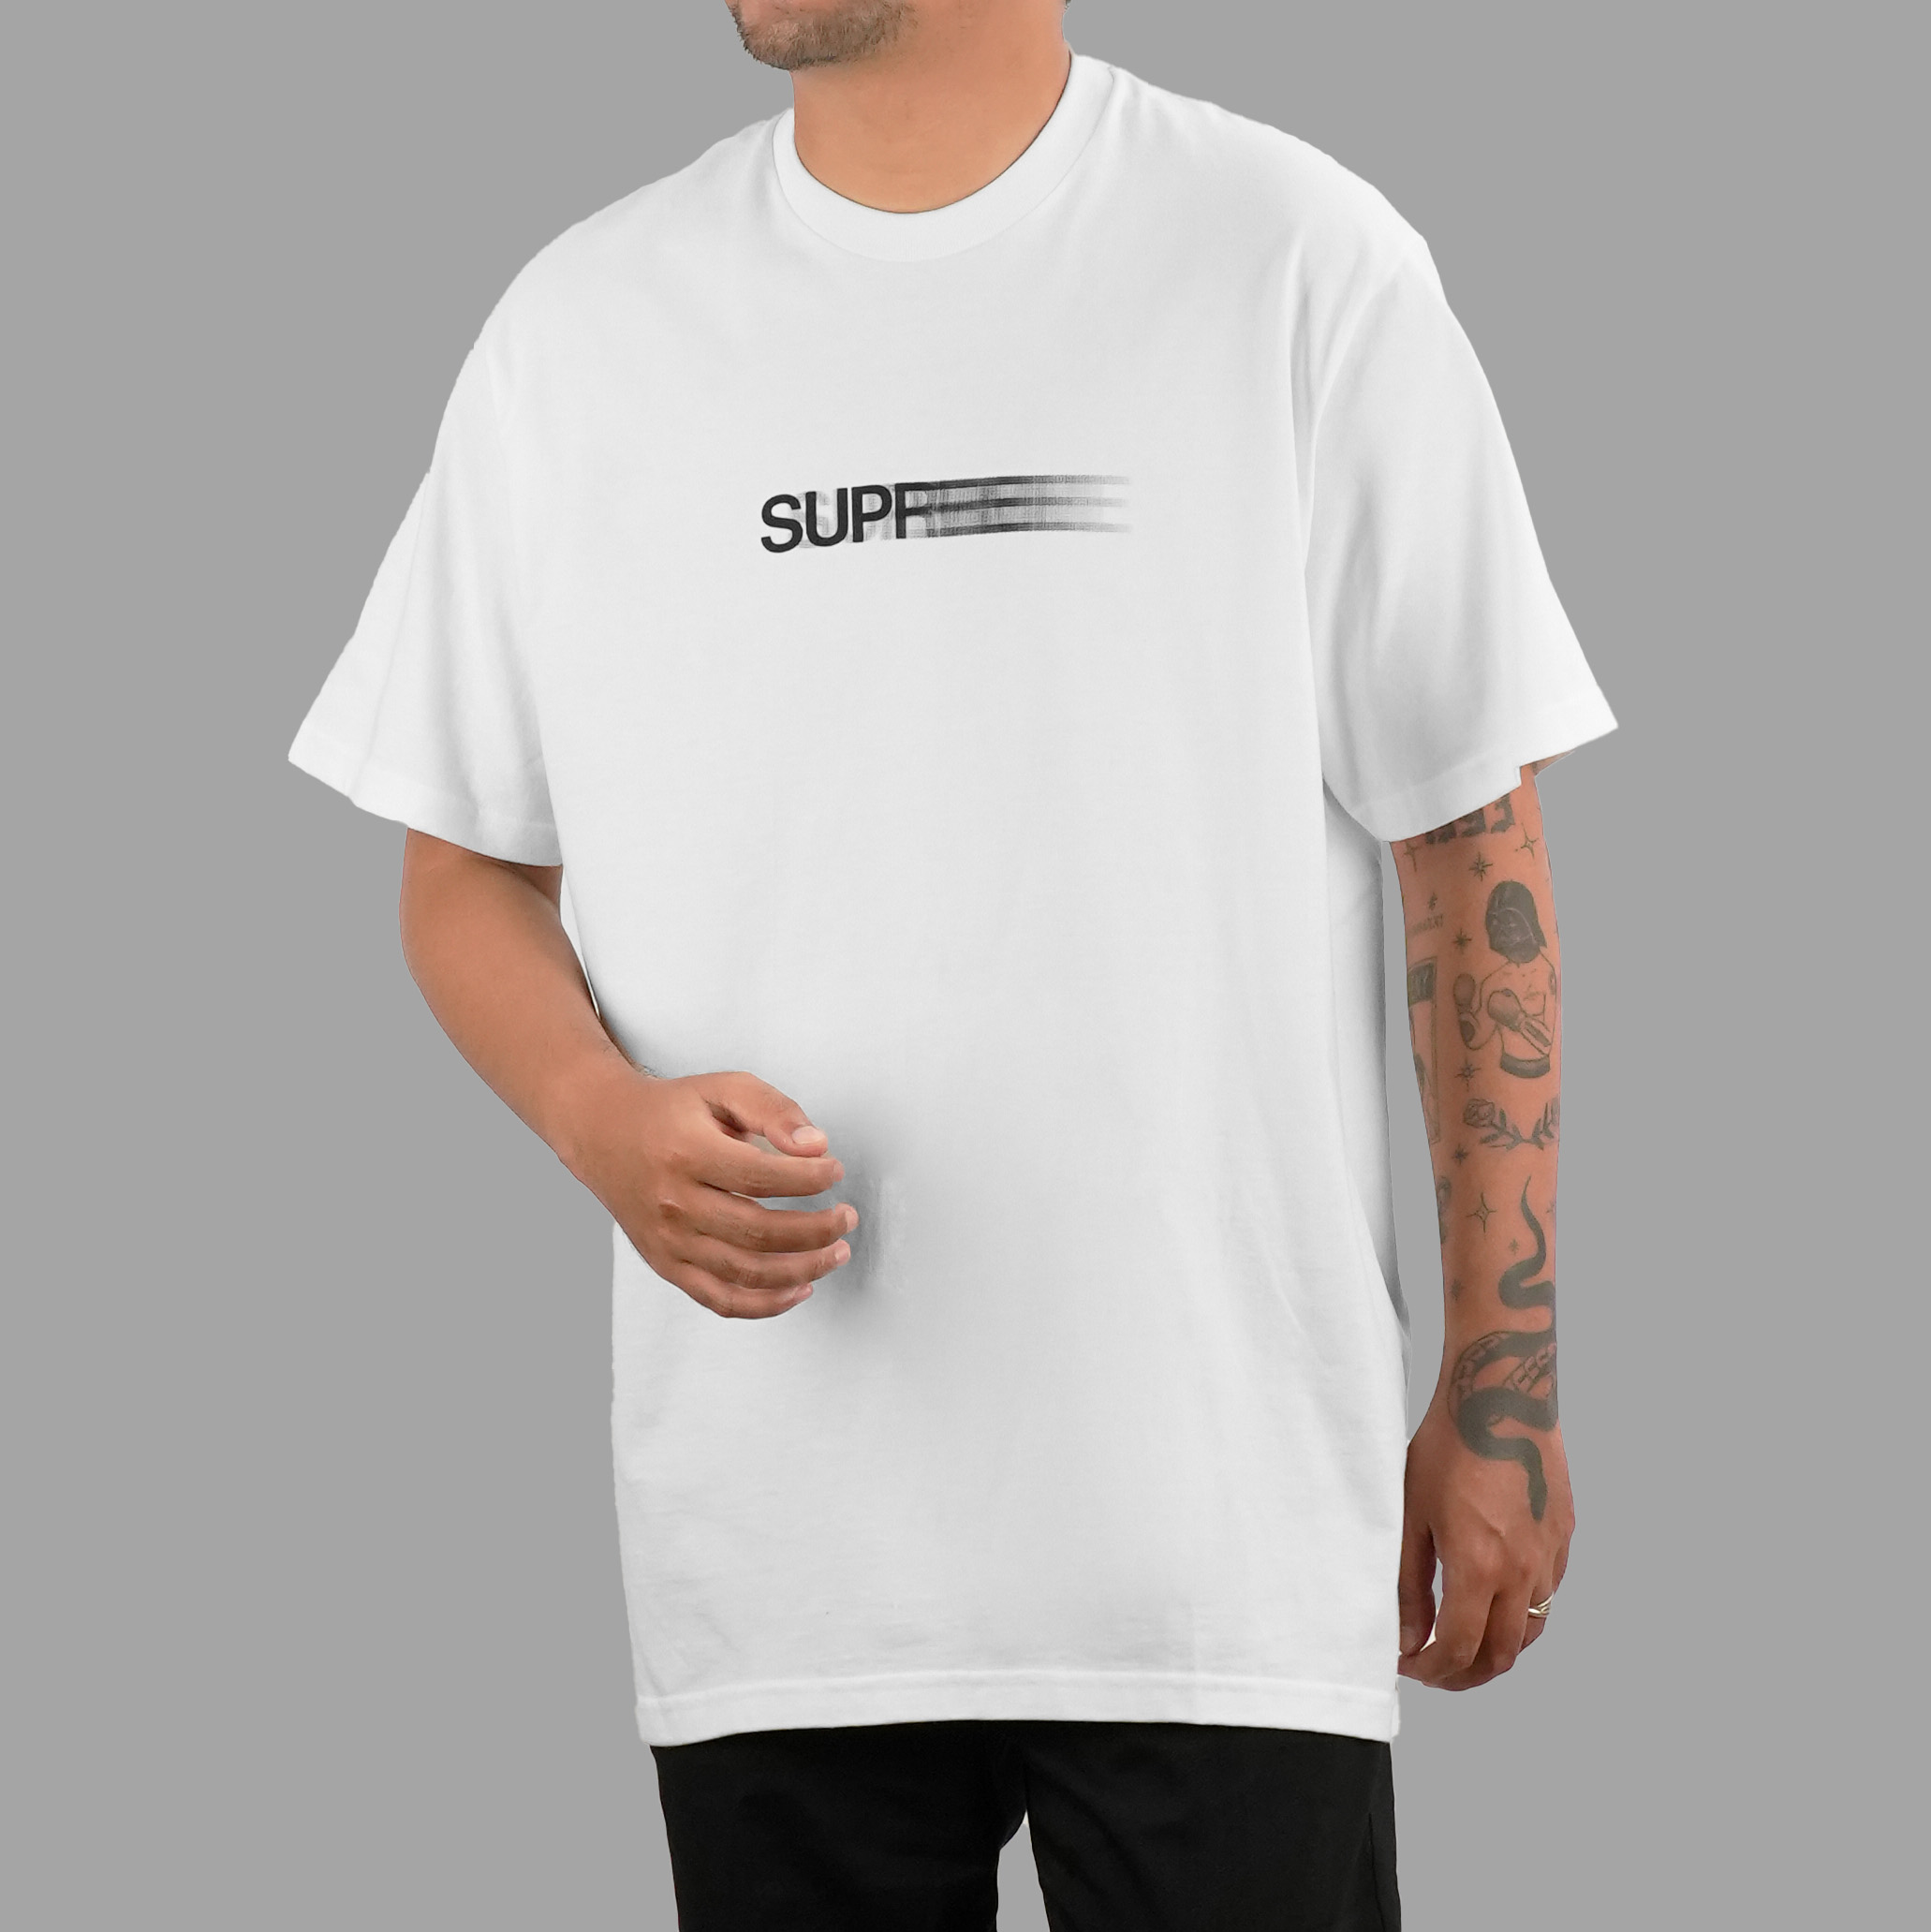 Tシャツ/カットソー(半袖/袖なし)Supreme Motion Logo Tee